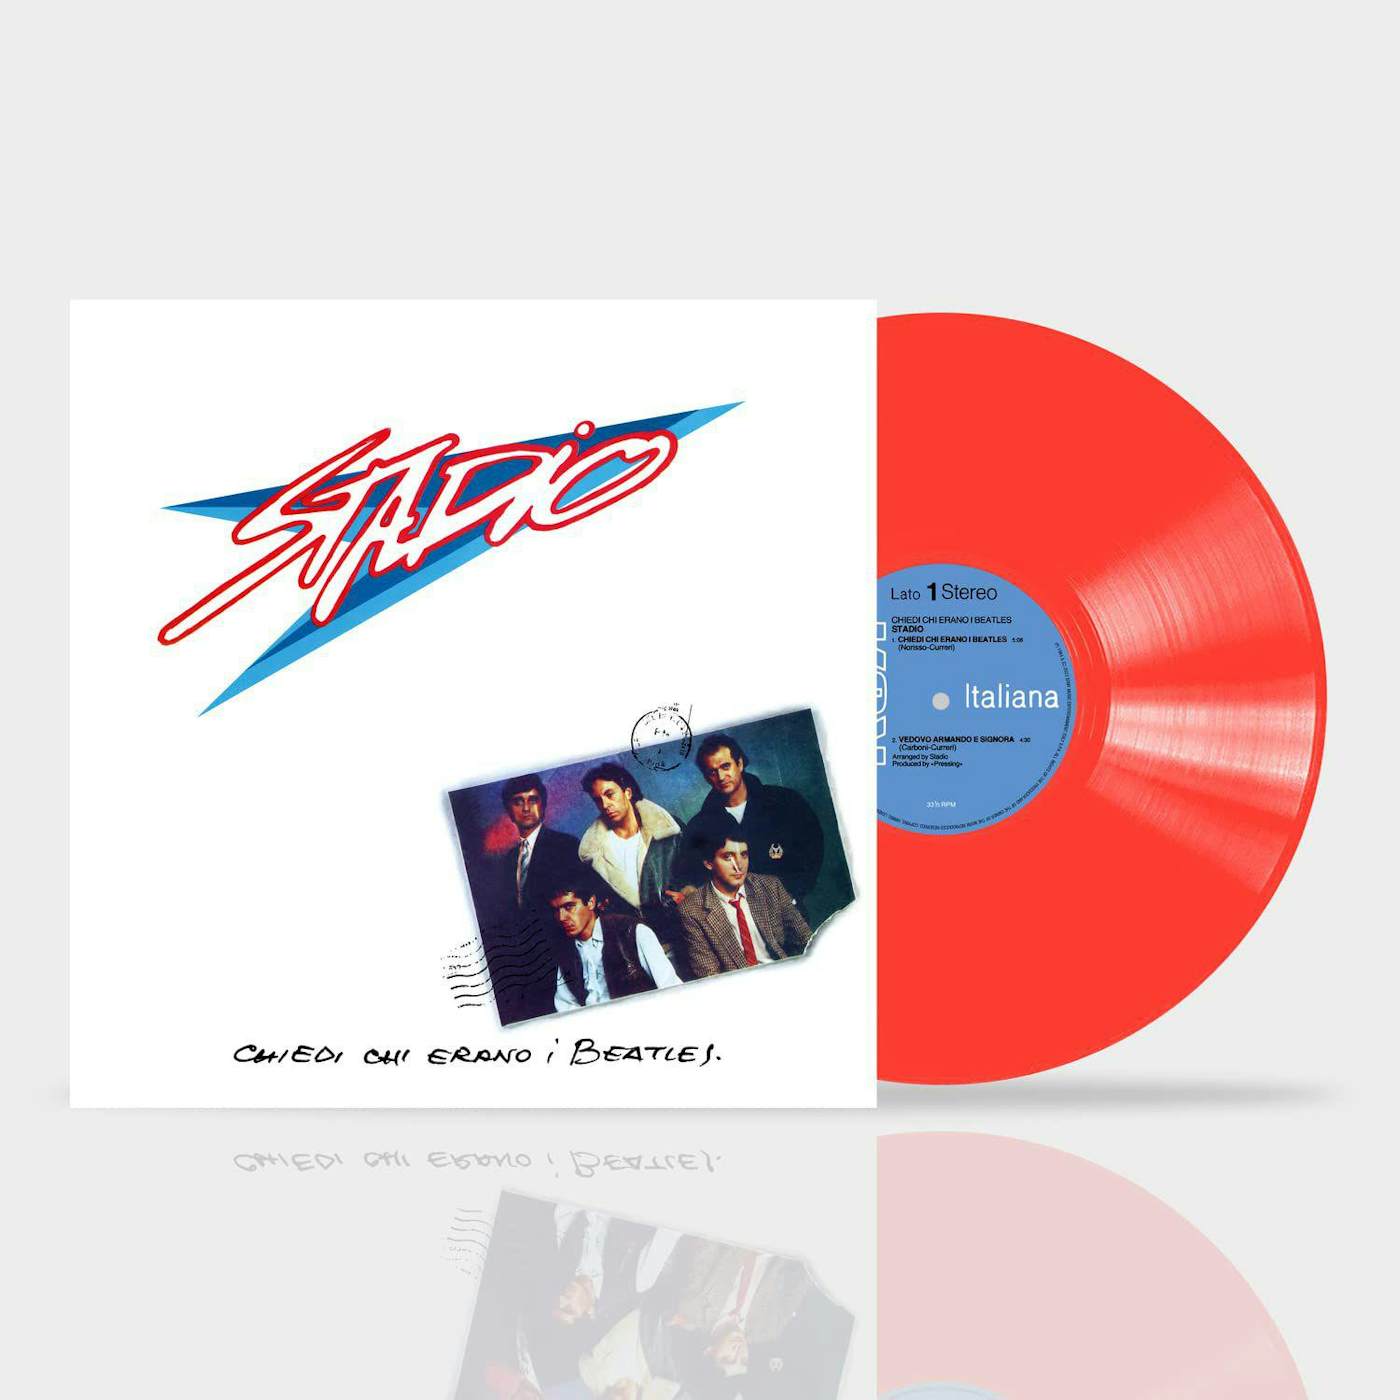 Stadio Chiedi Chi Erano I Beatles (Red) Vinyl Record